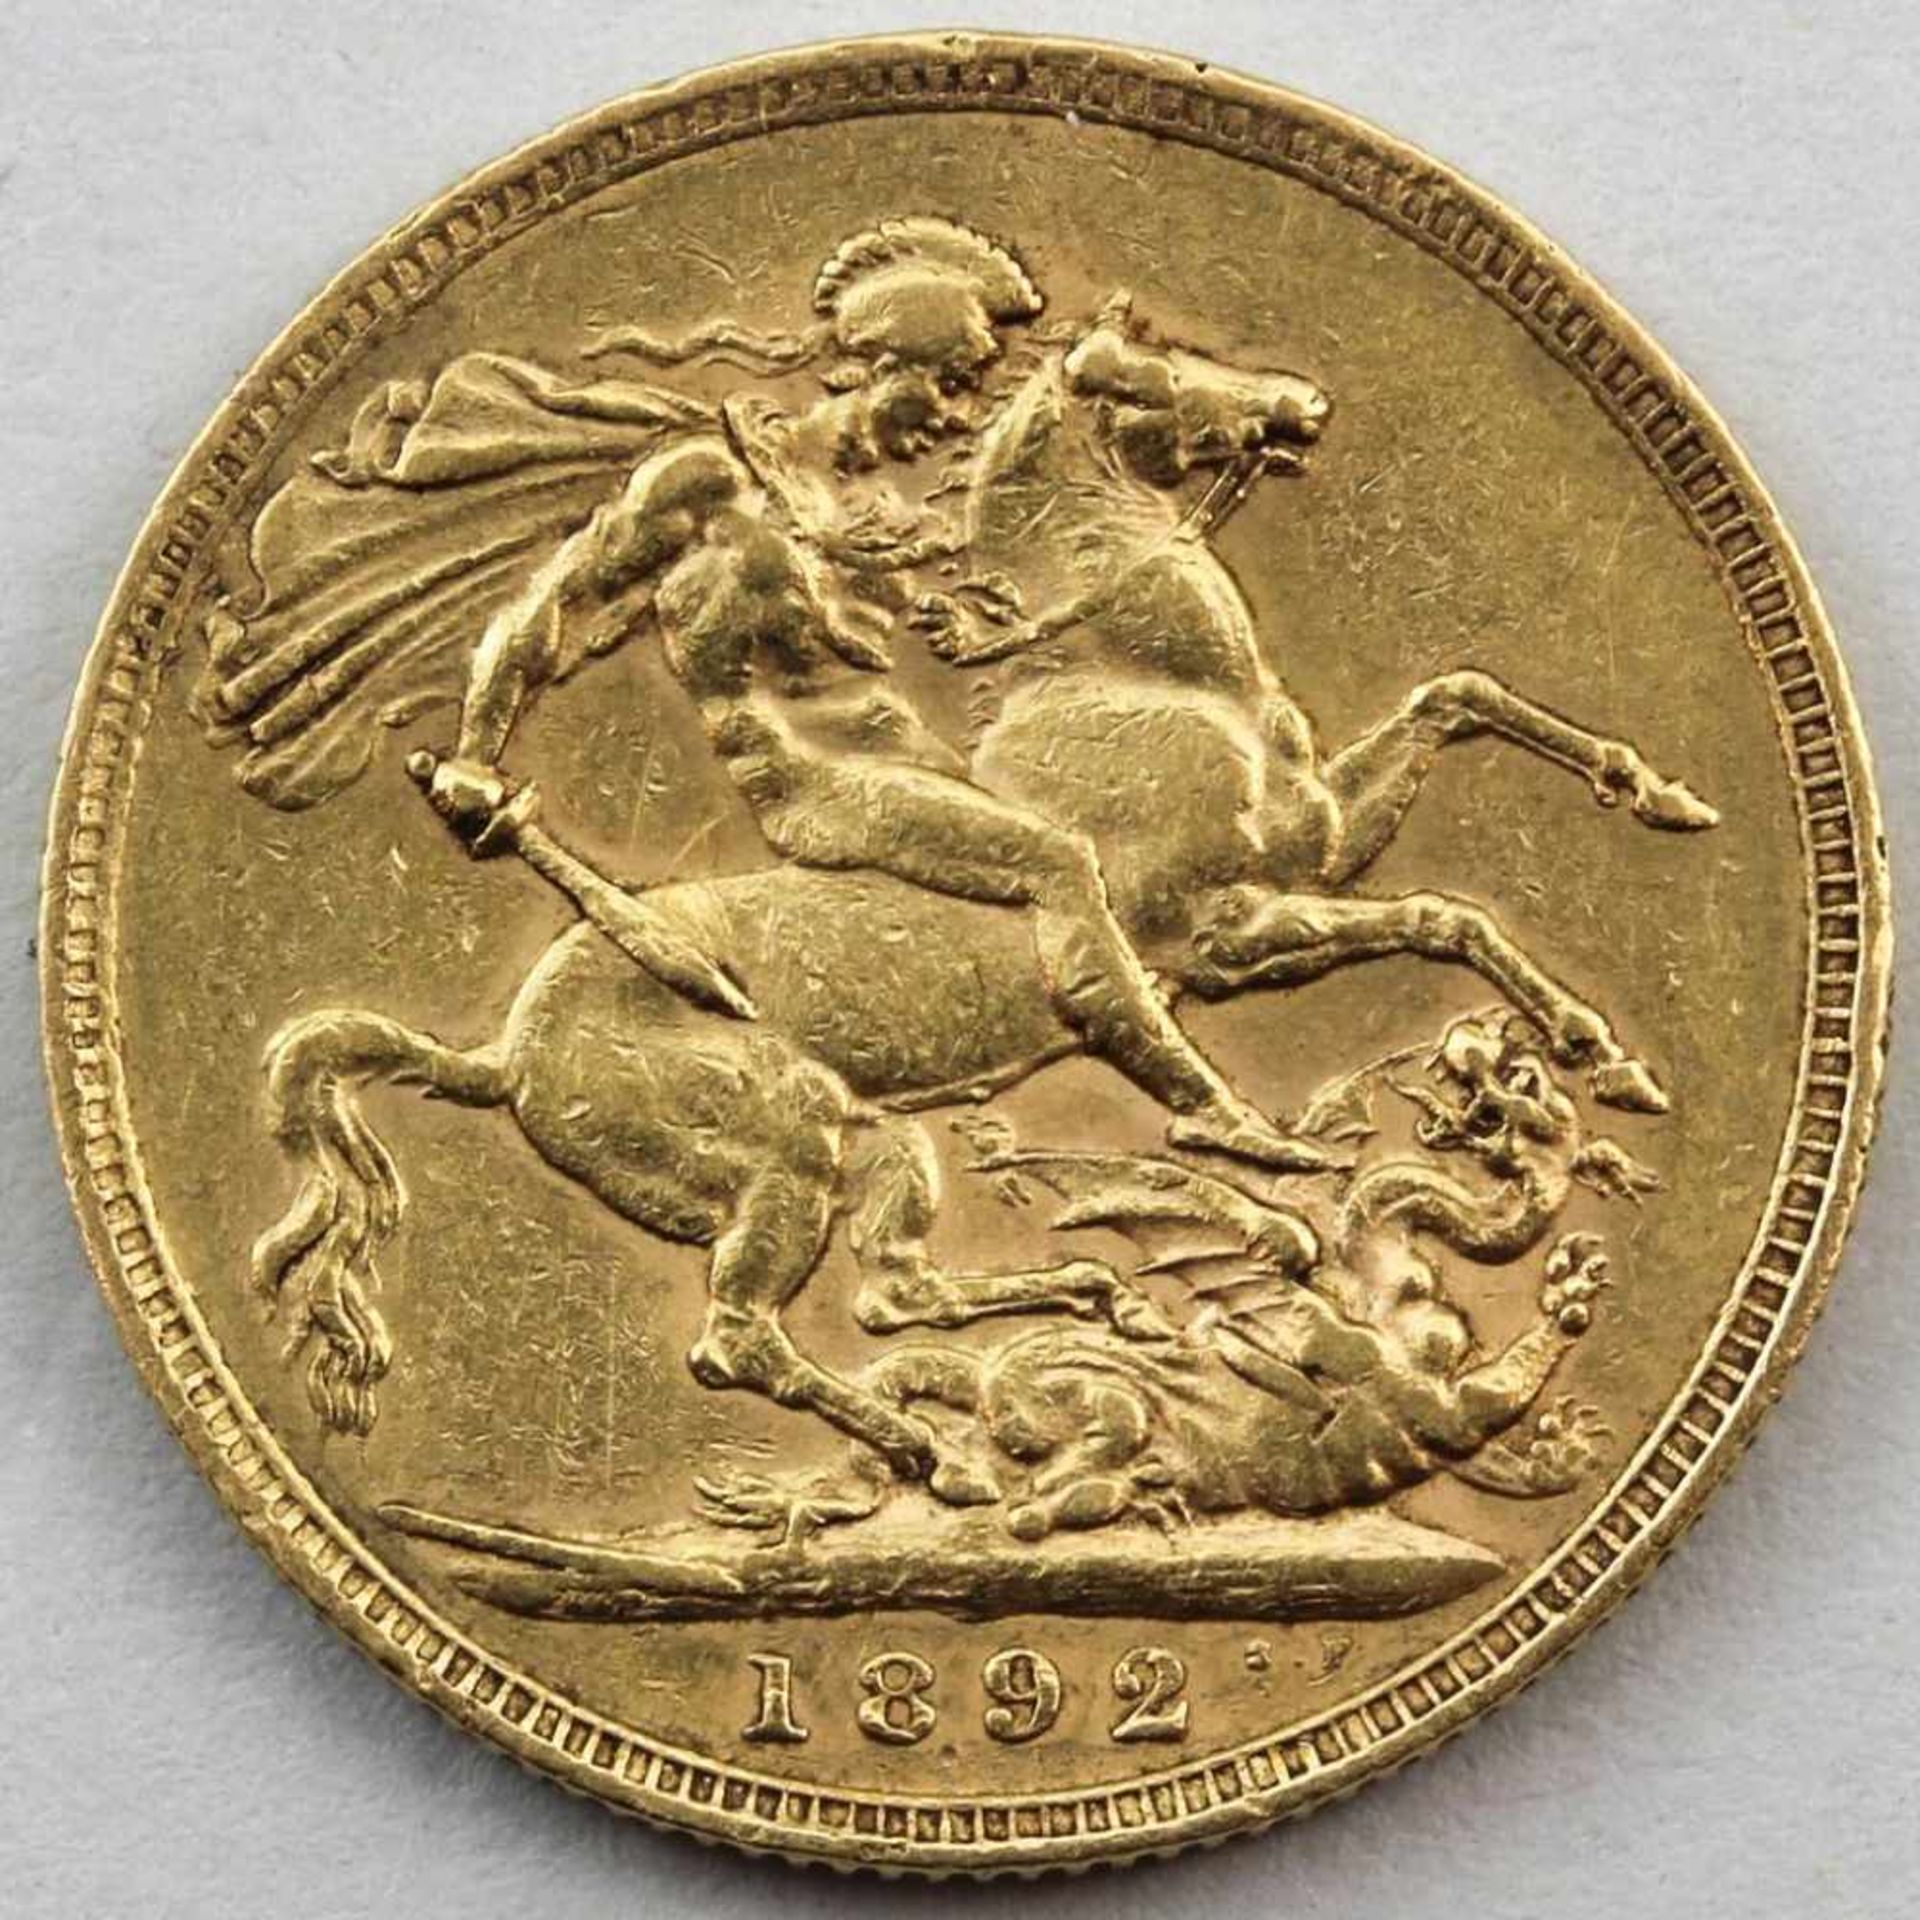 Goldmünze, England, Victoria, 1 Sovereign, 1892.917/000 GG, 7,97 g. ss.- - -19.33 % buyer's